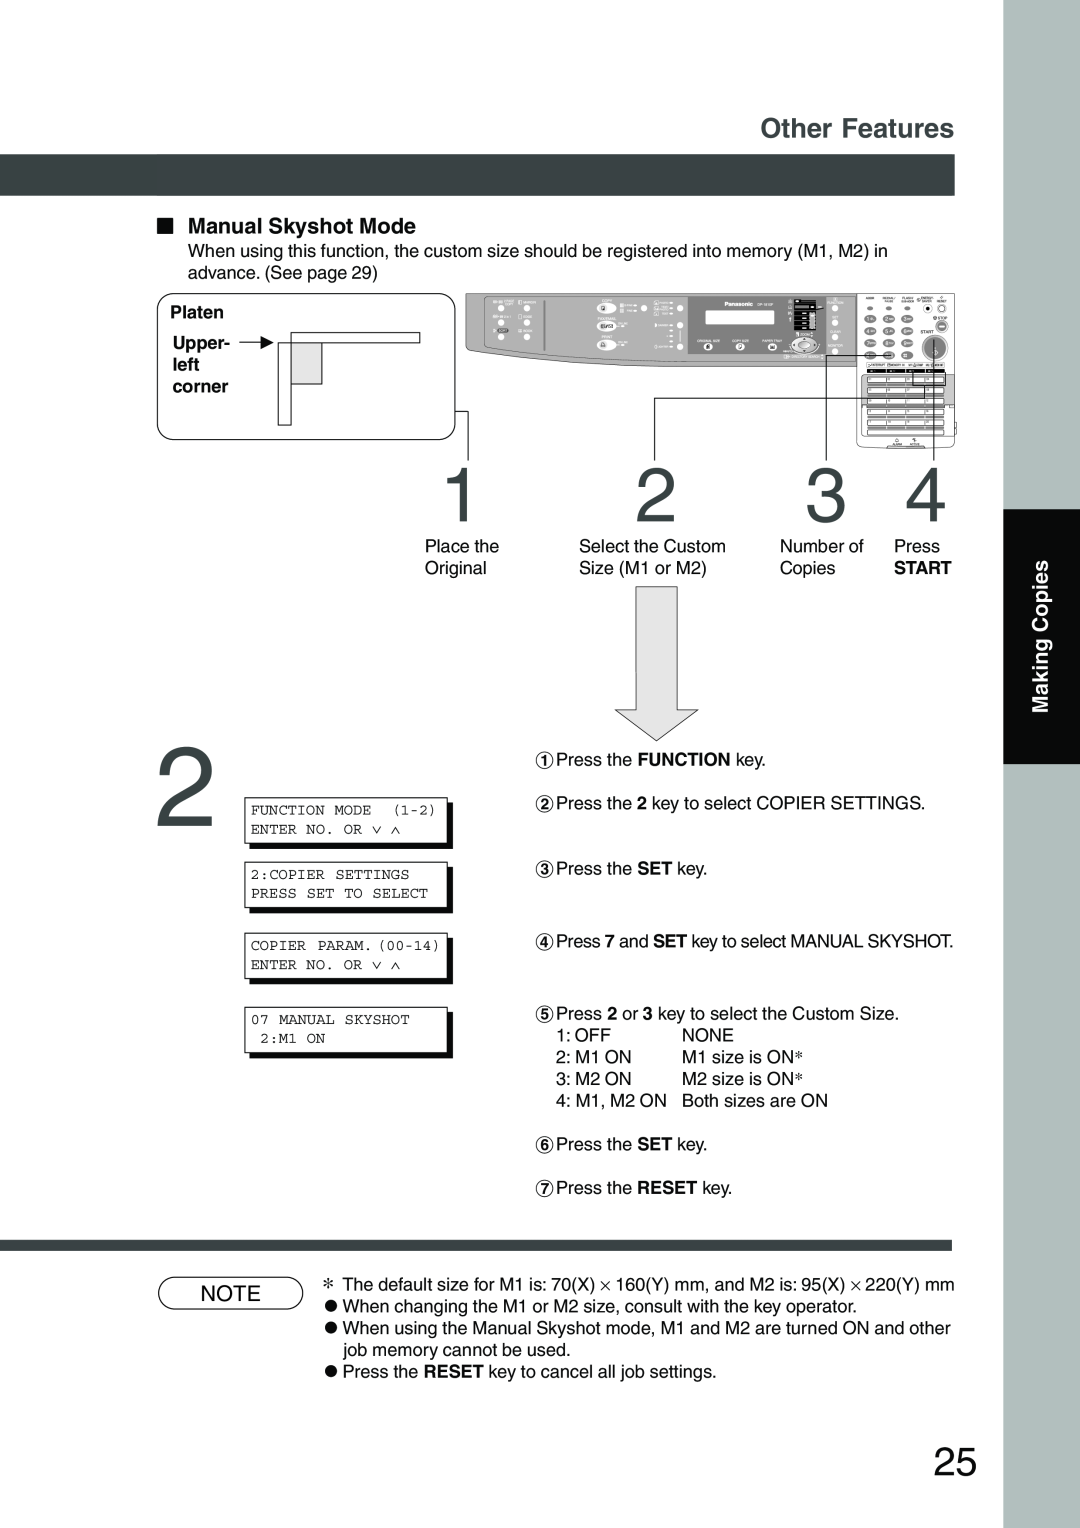 Panasonic DP-1810F manual Manual Skyshot Mode, Other Features, Making Copies 